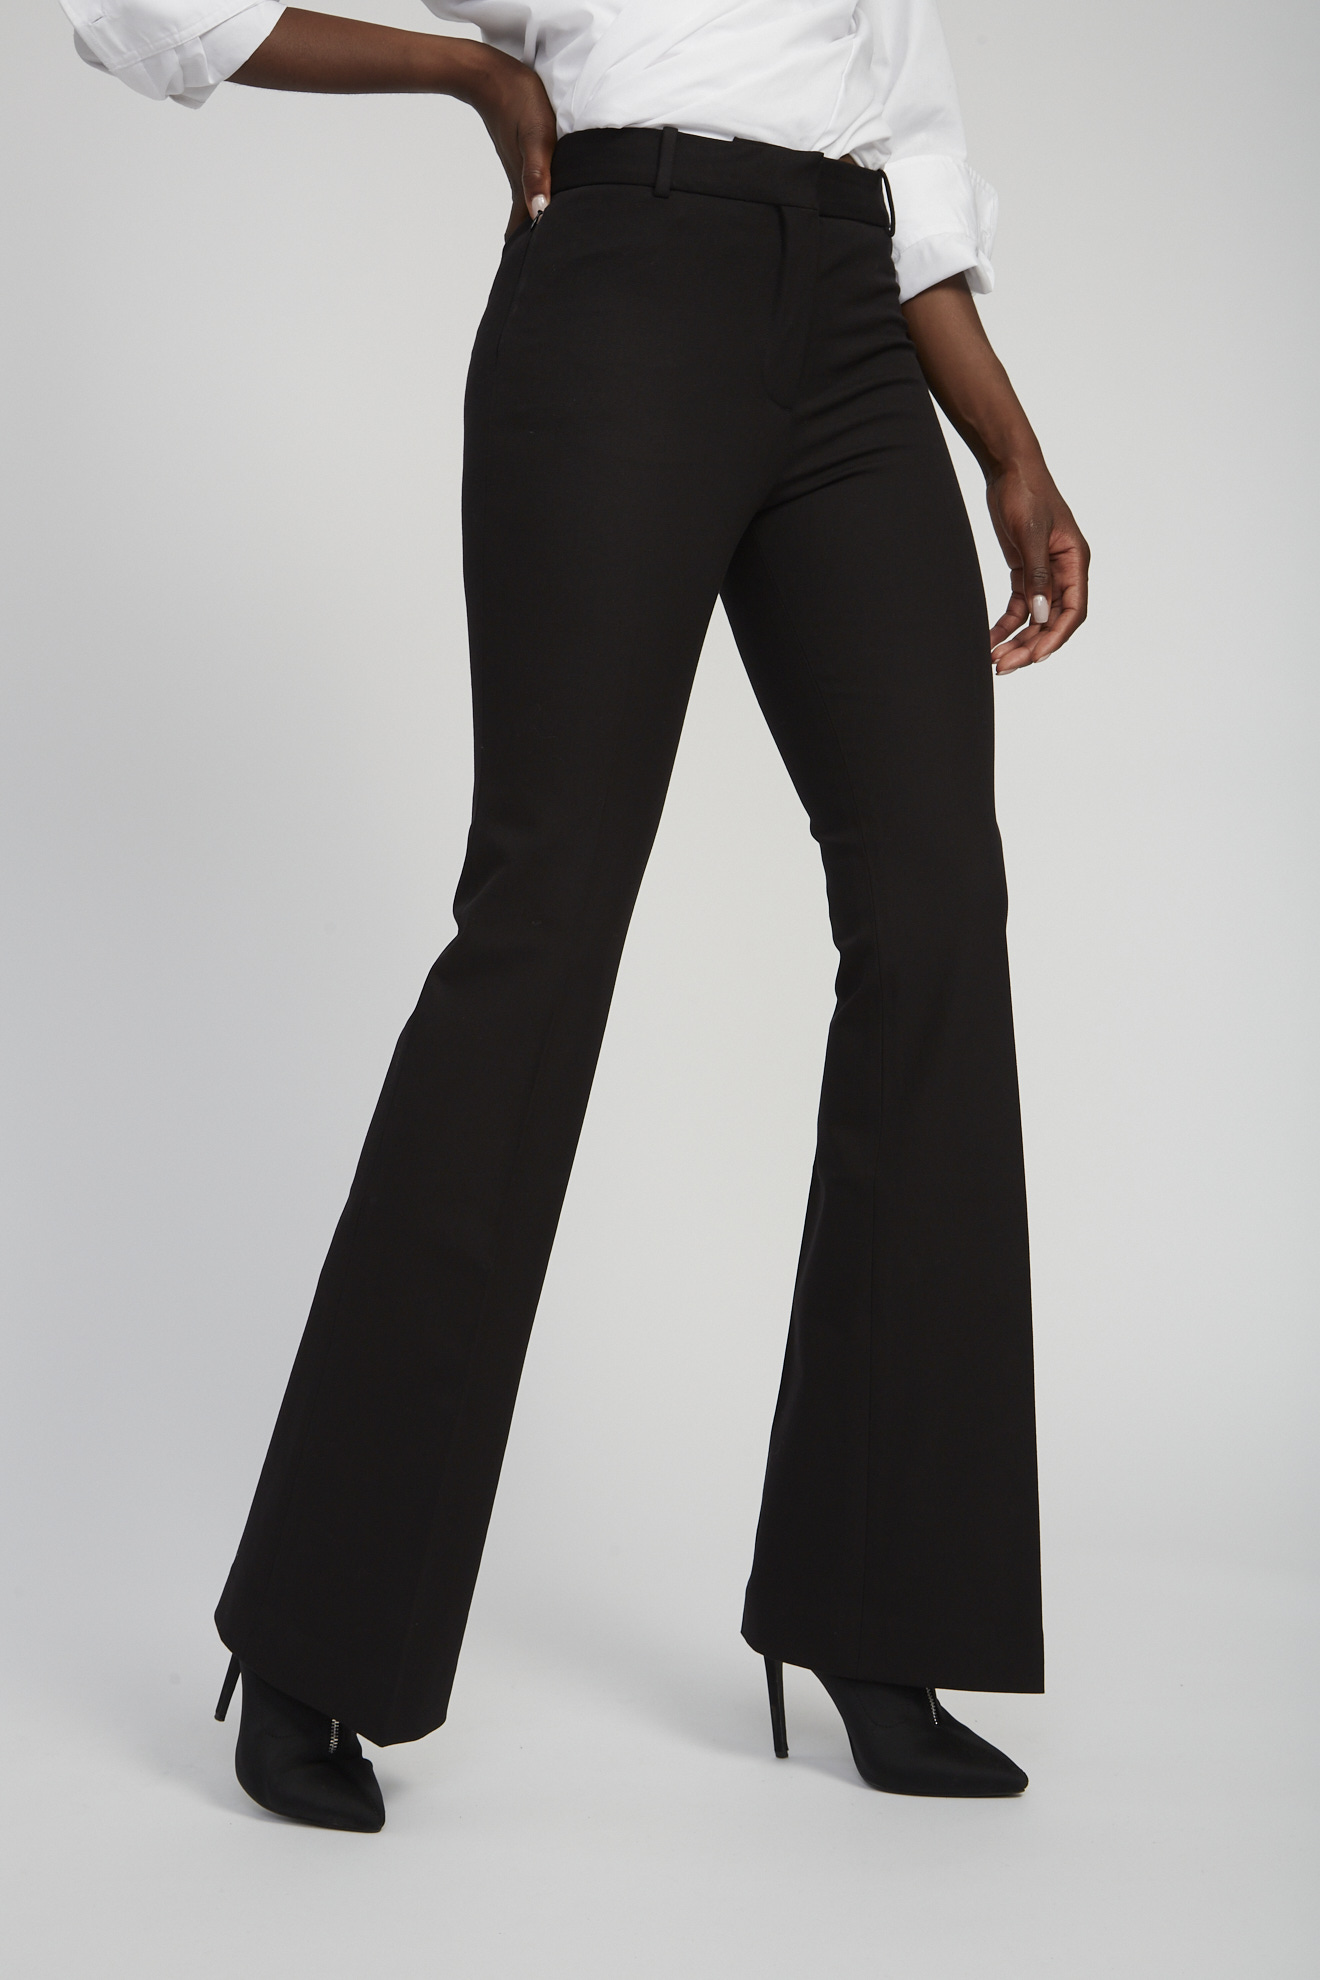 frame pants black plain jeans model front